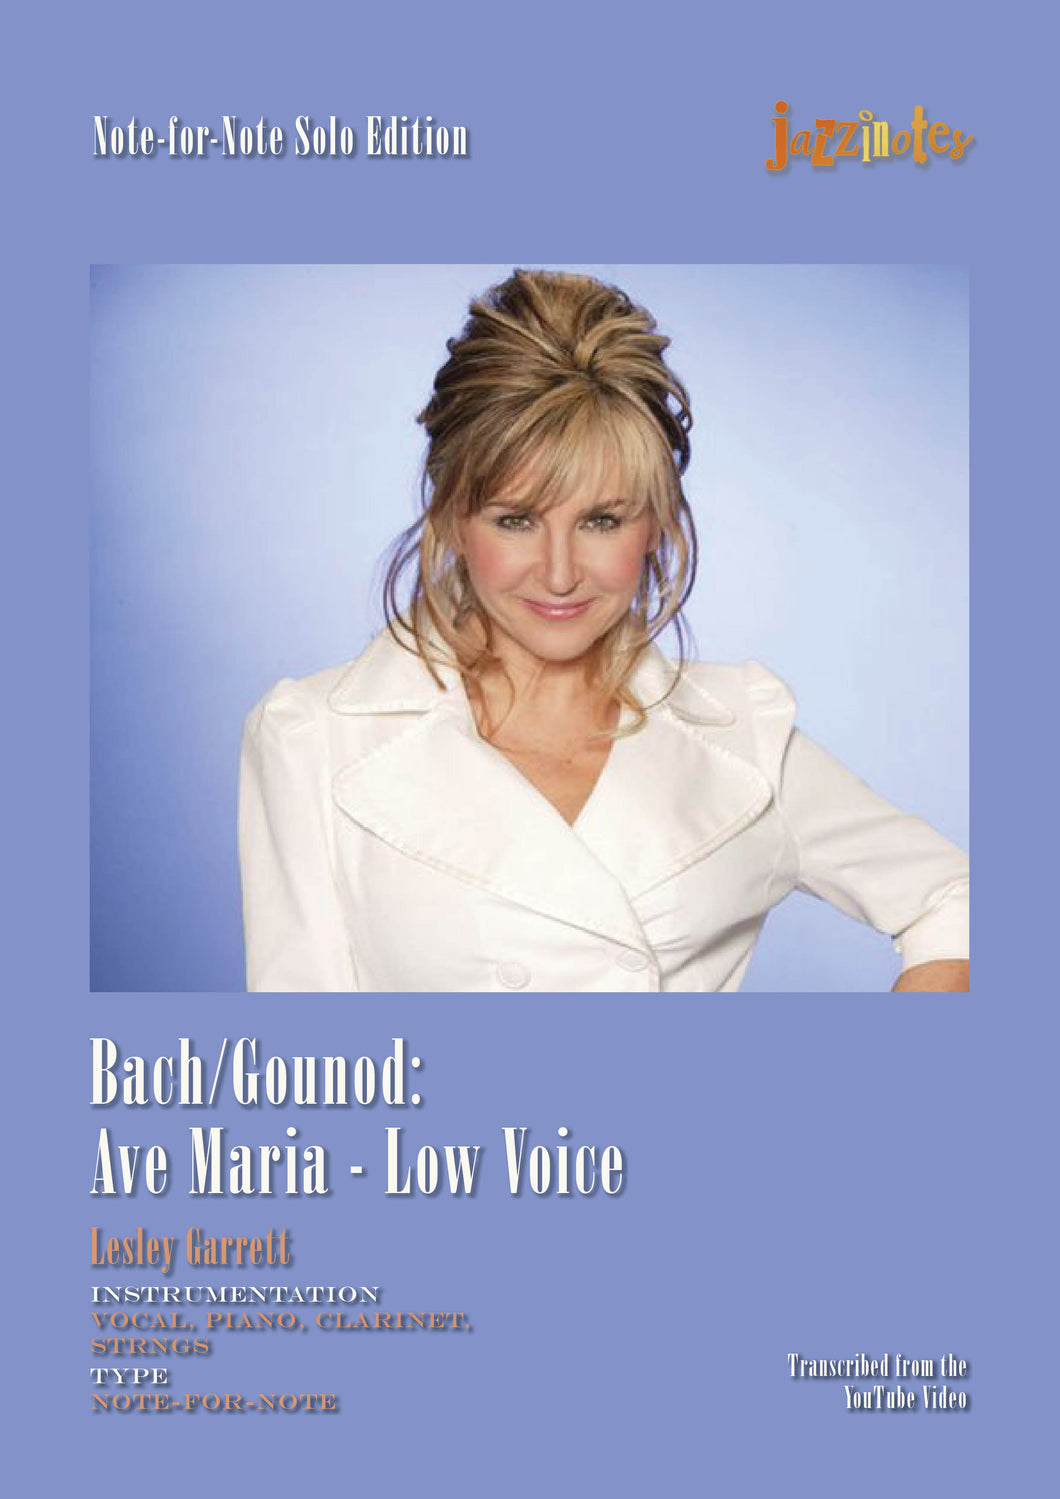 Bach/Gounod: Ave Maria (Lesley Garrett) - low voice Db major - Sheet Music Download